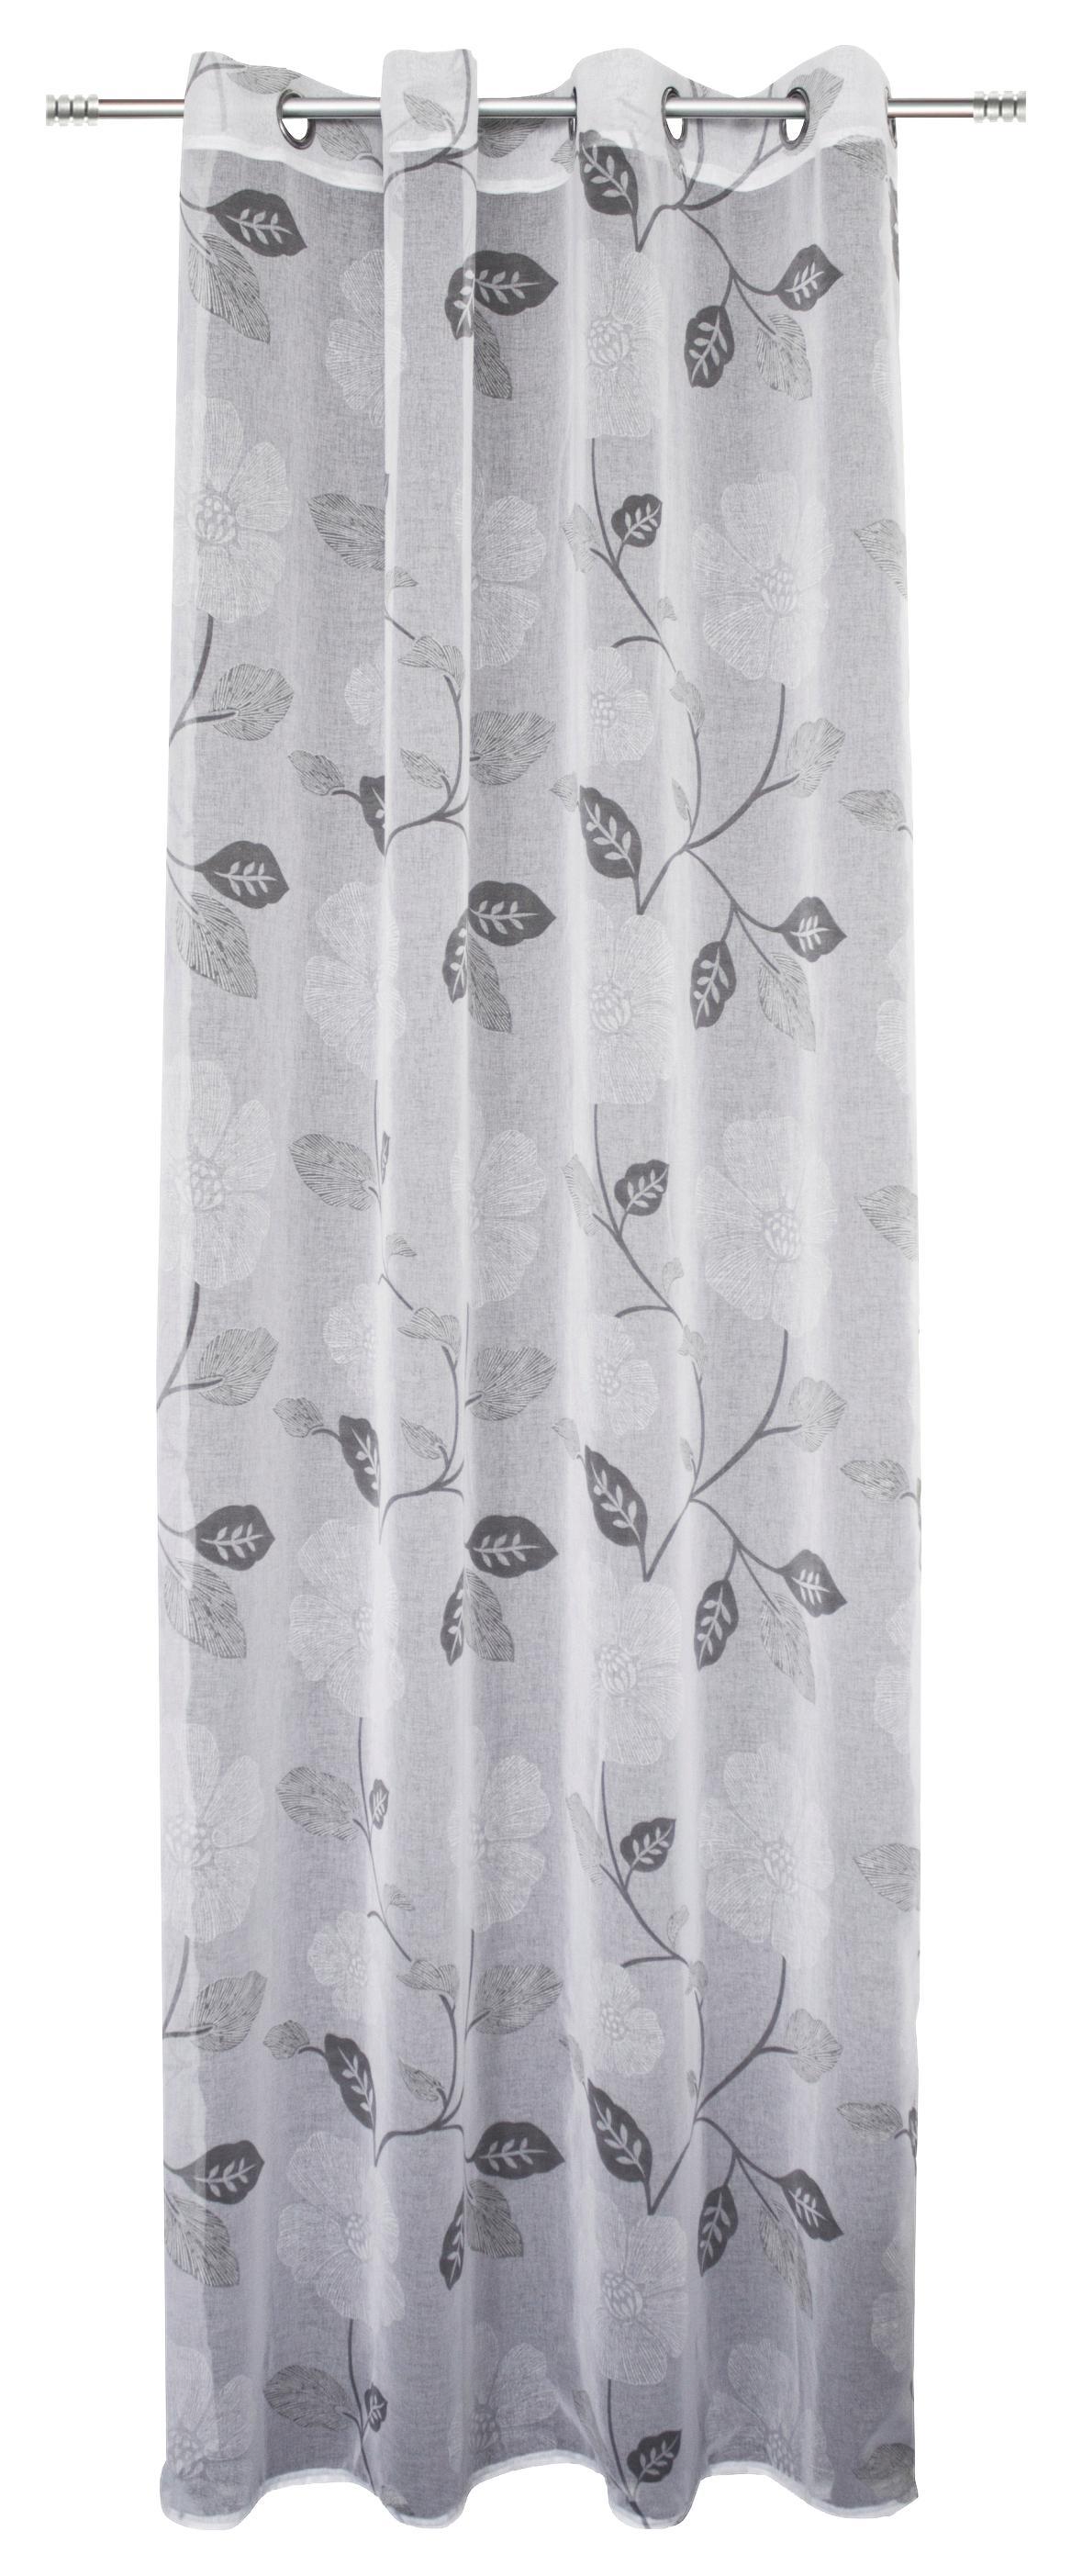 Vorhang mit Ösen Iver B: 140 cm Silber - Grau, MODERN, Textil (140/245cm) - Luca Bessoni